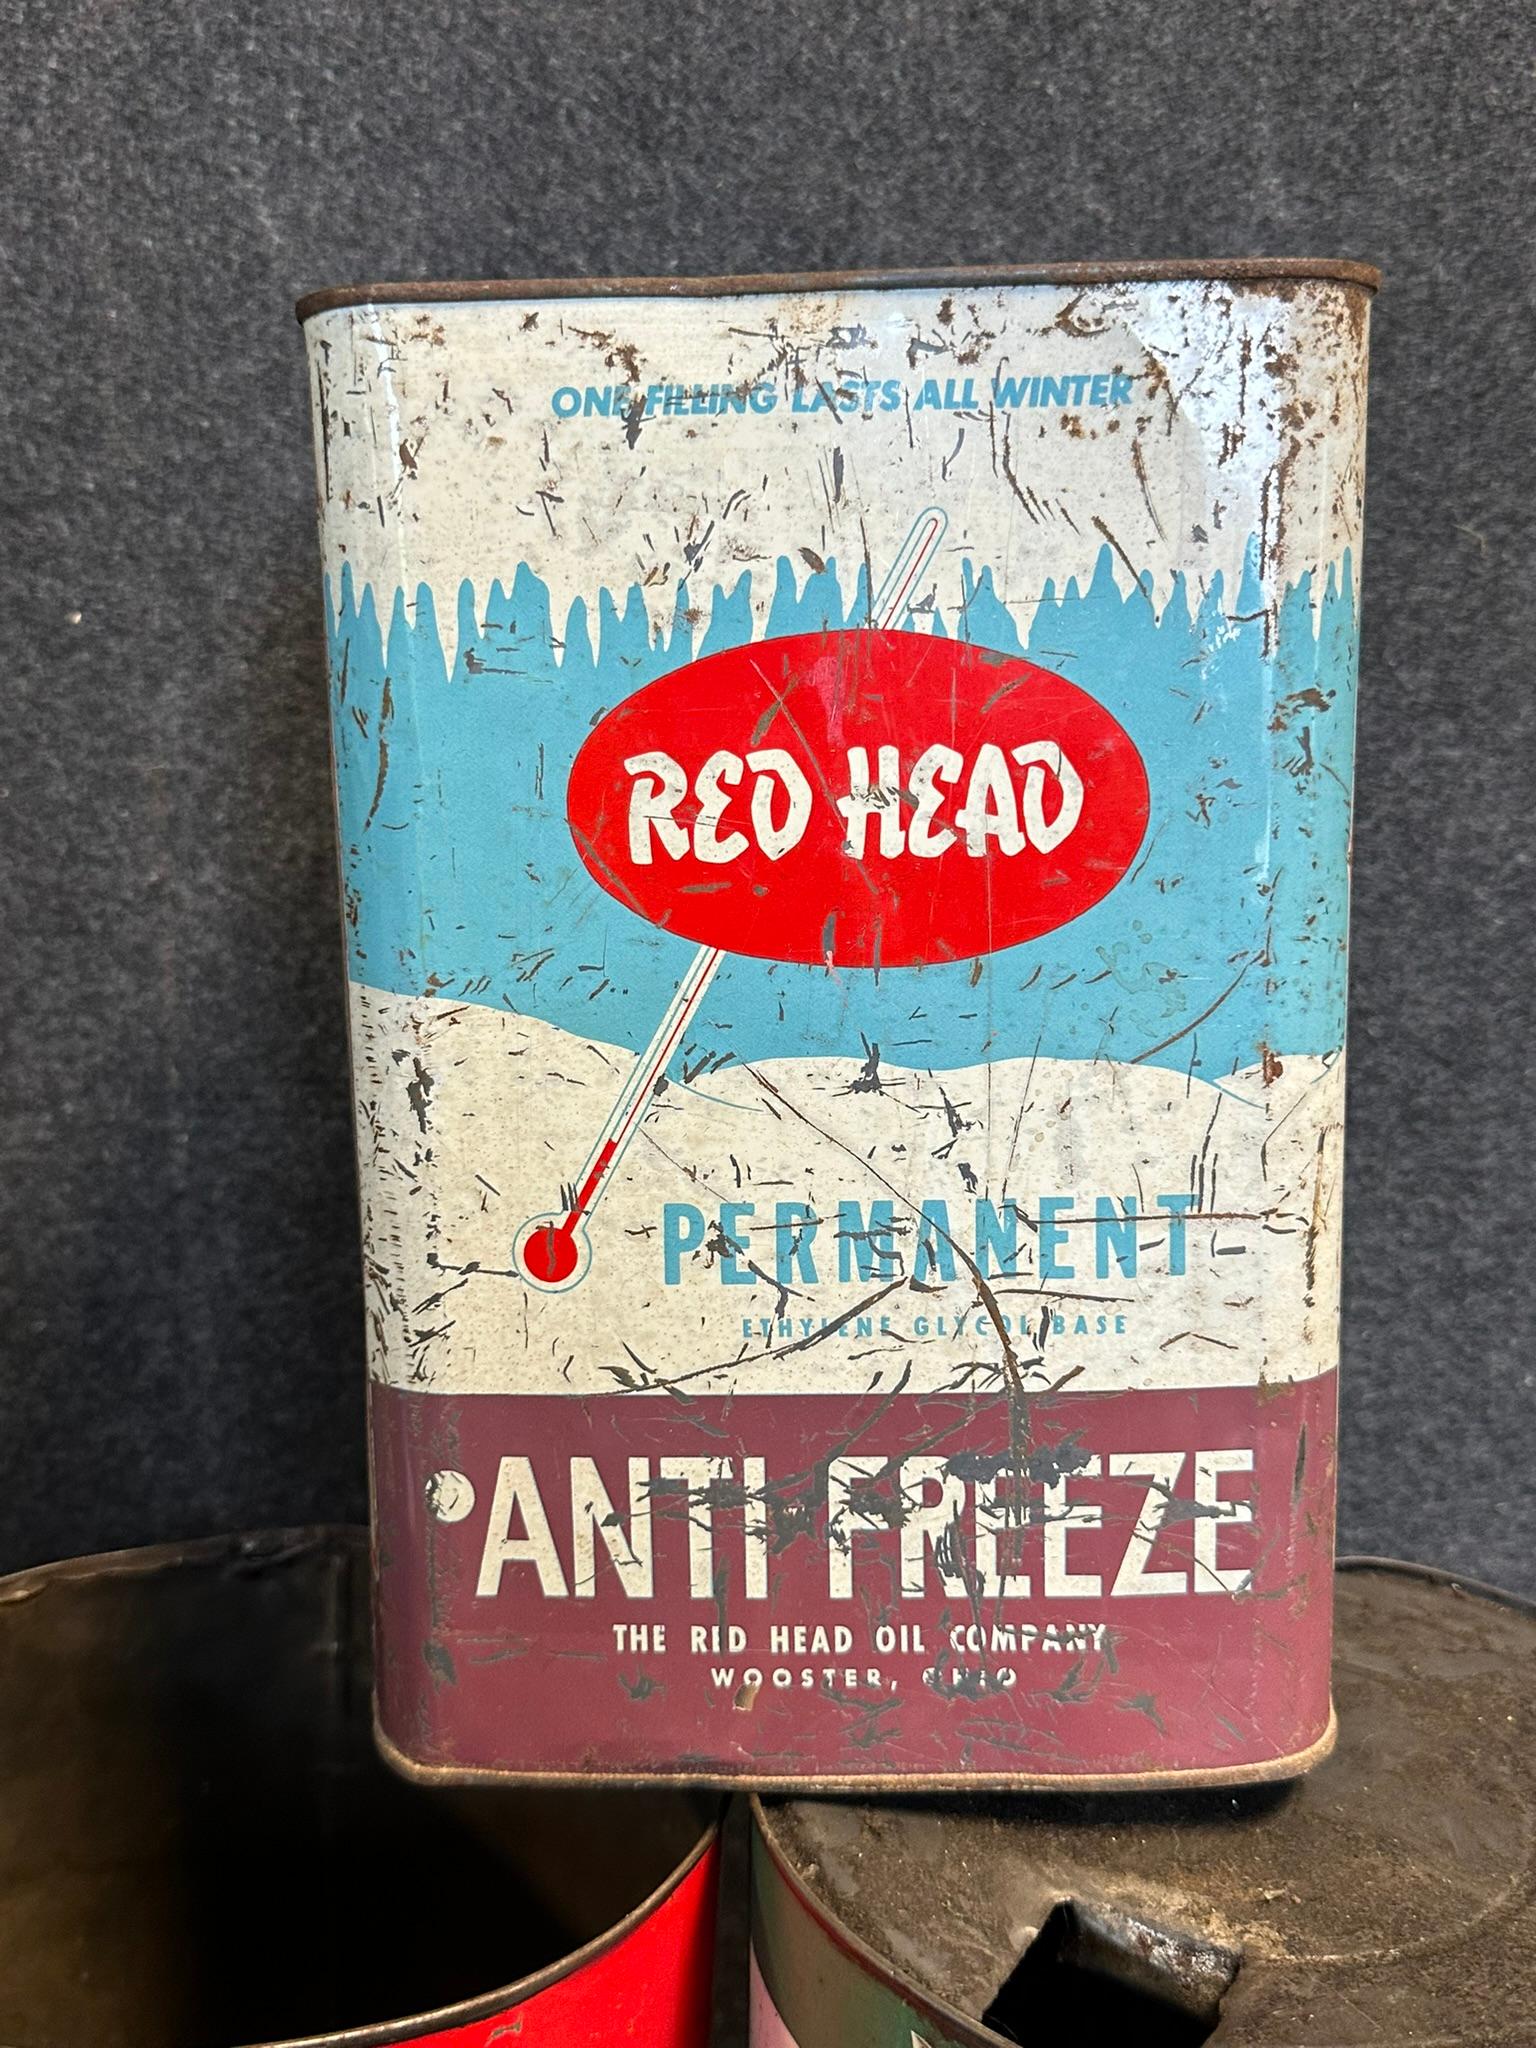 Lot of 7 Anti Freeze 1 Gallon Cans & Folk Art Atlas Quart Can Oiler Can: Redhead, Warlasco, Wakefiel